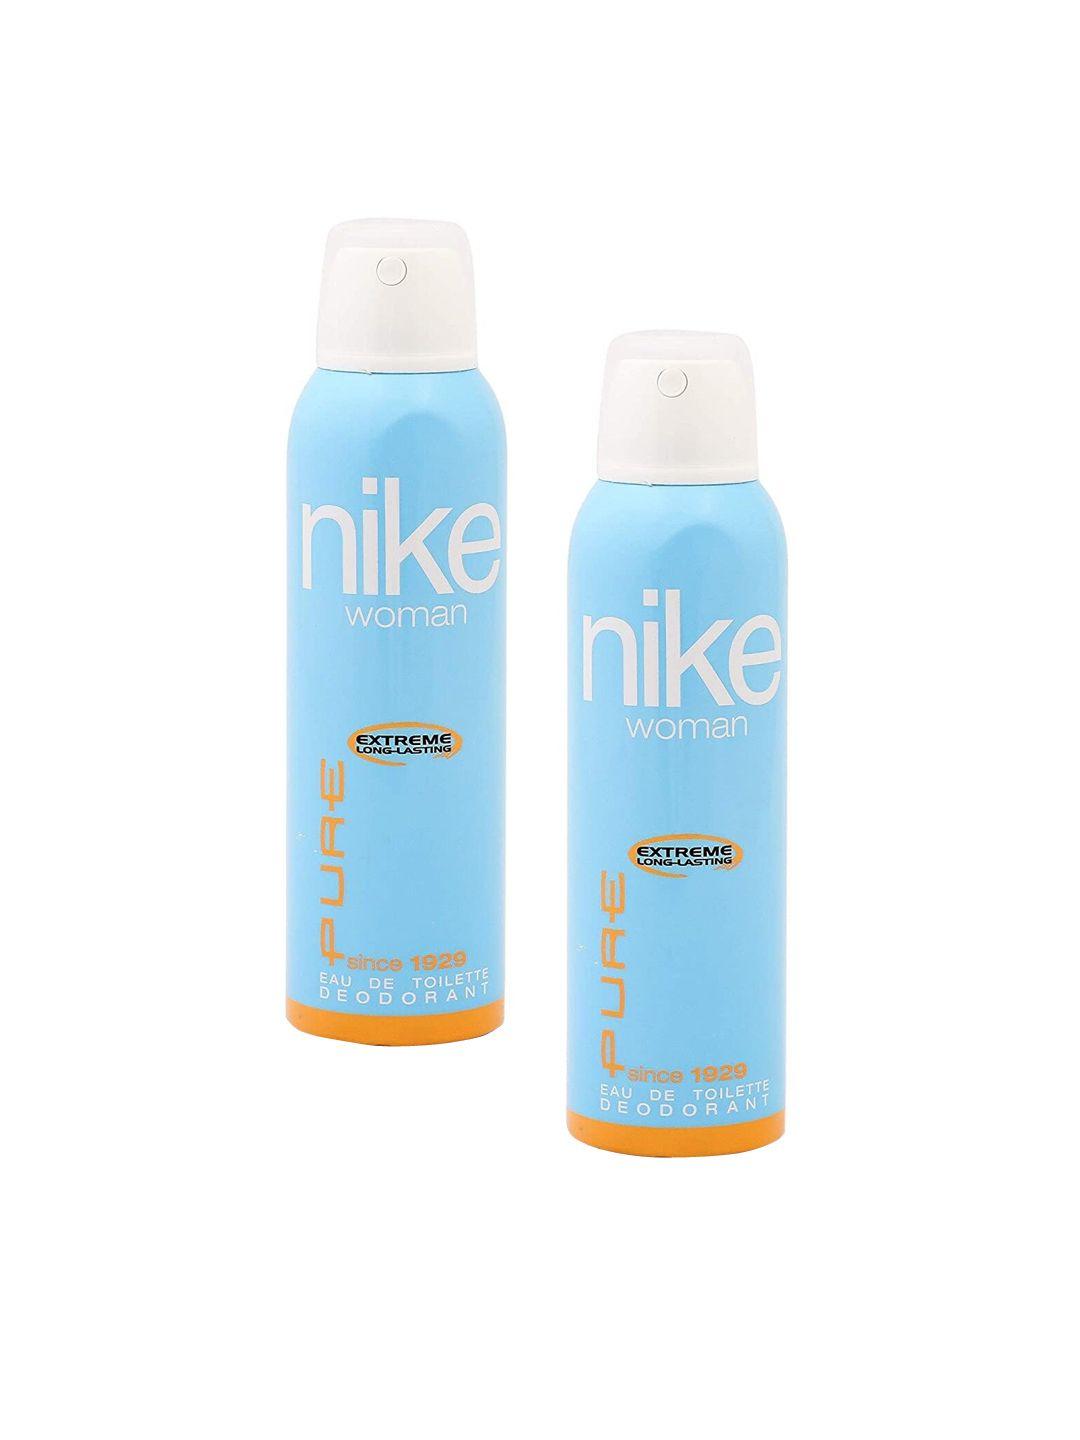 nike pack of 2 woman pure deodorant- 200ml each